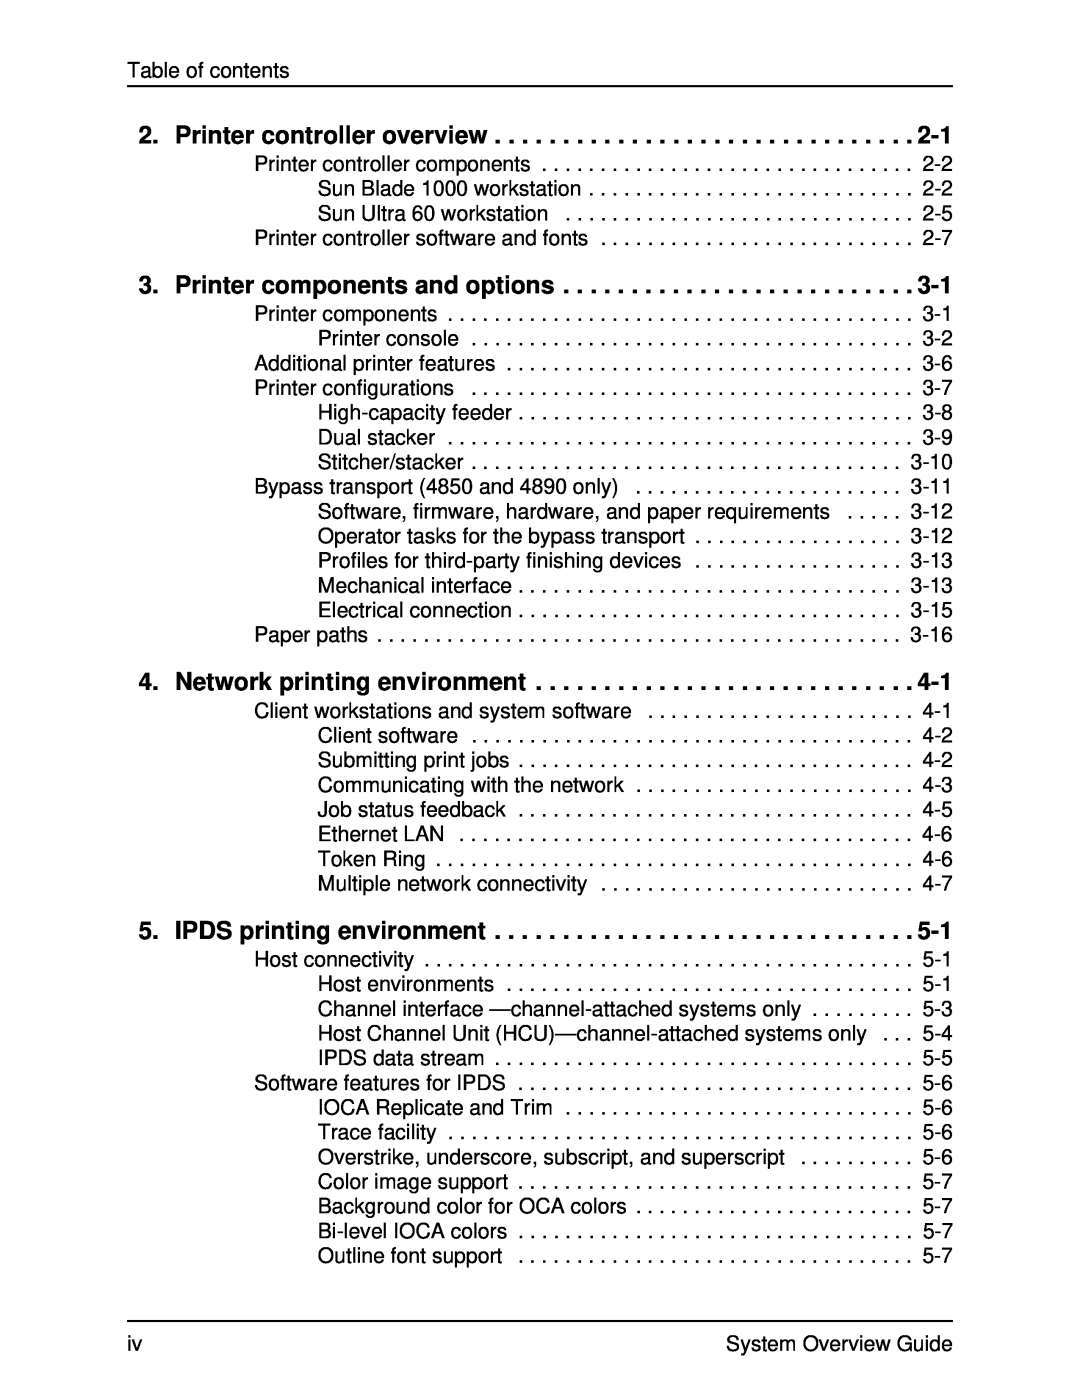 Xerox 92C, IPS, NPS, 4890, 4850 manual Table of contents 